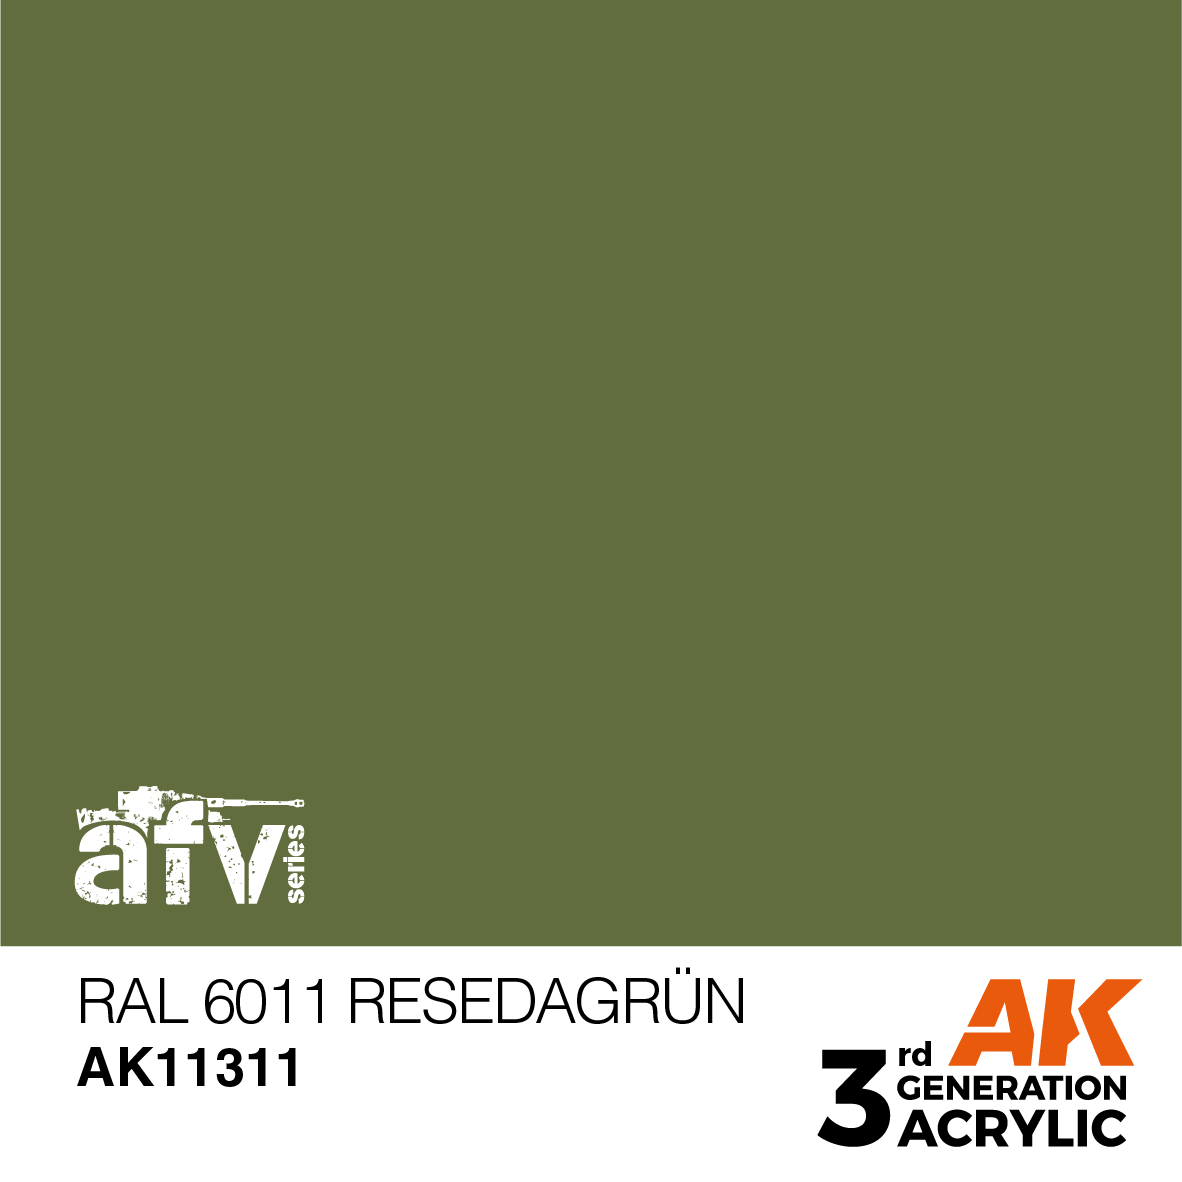 AK Interactive RAL 6011 Resedagrn 17 ml